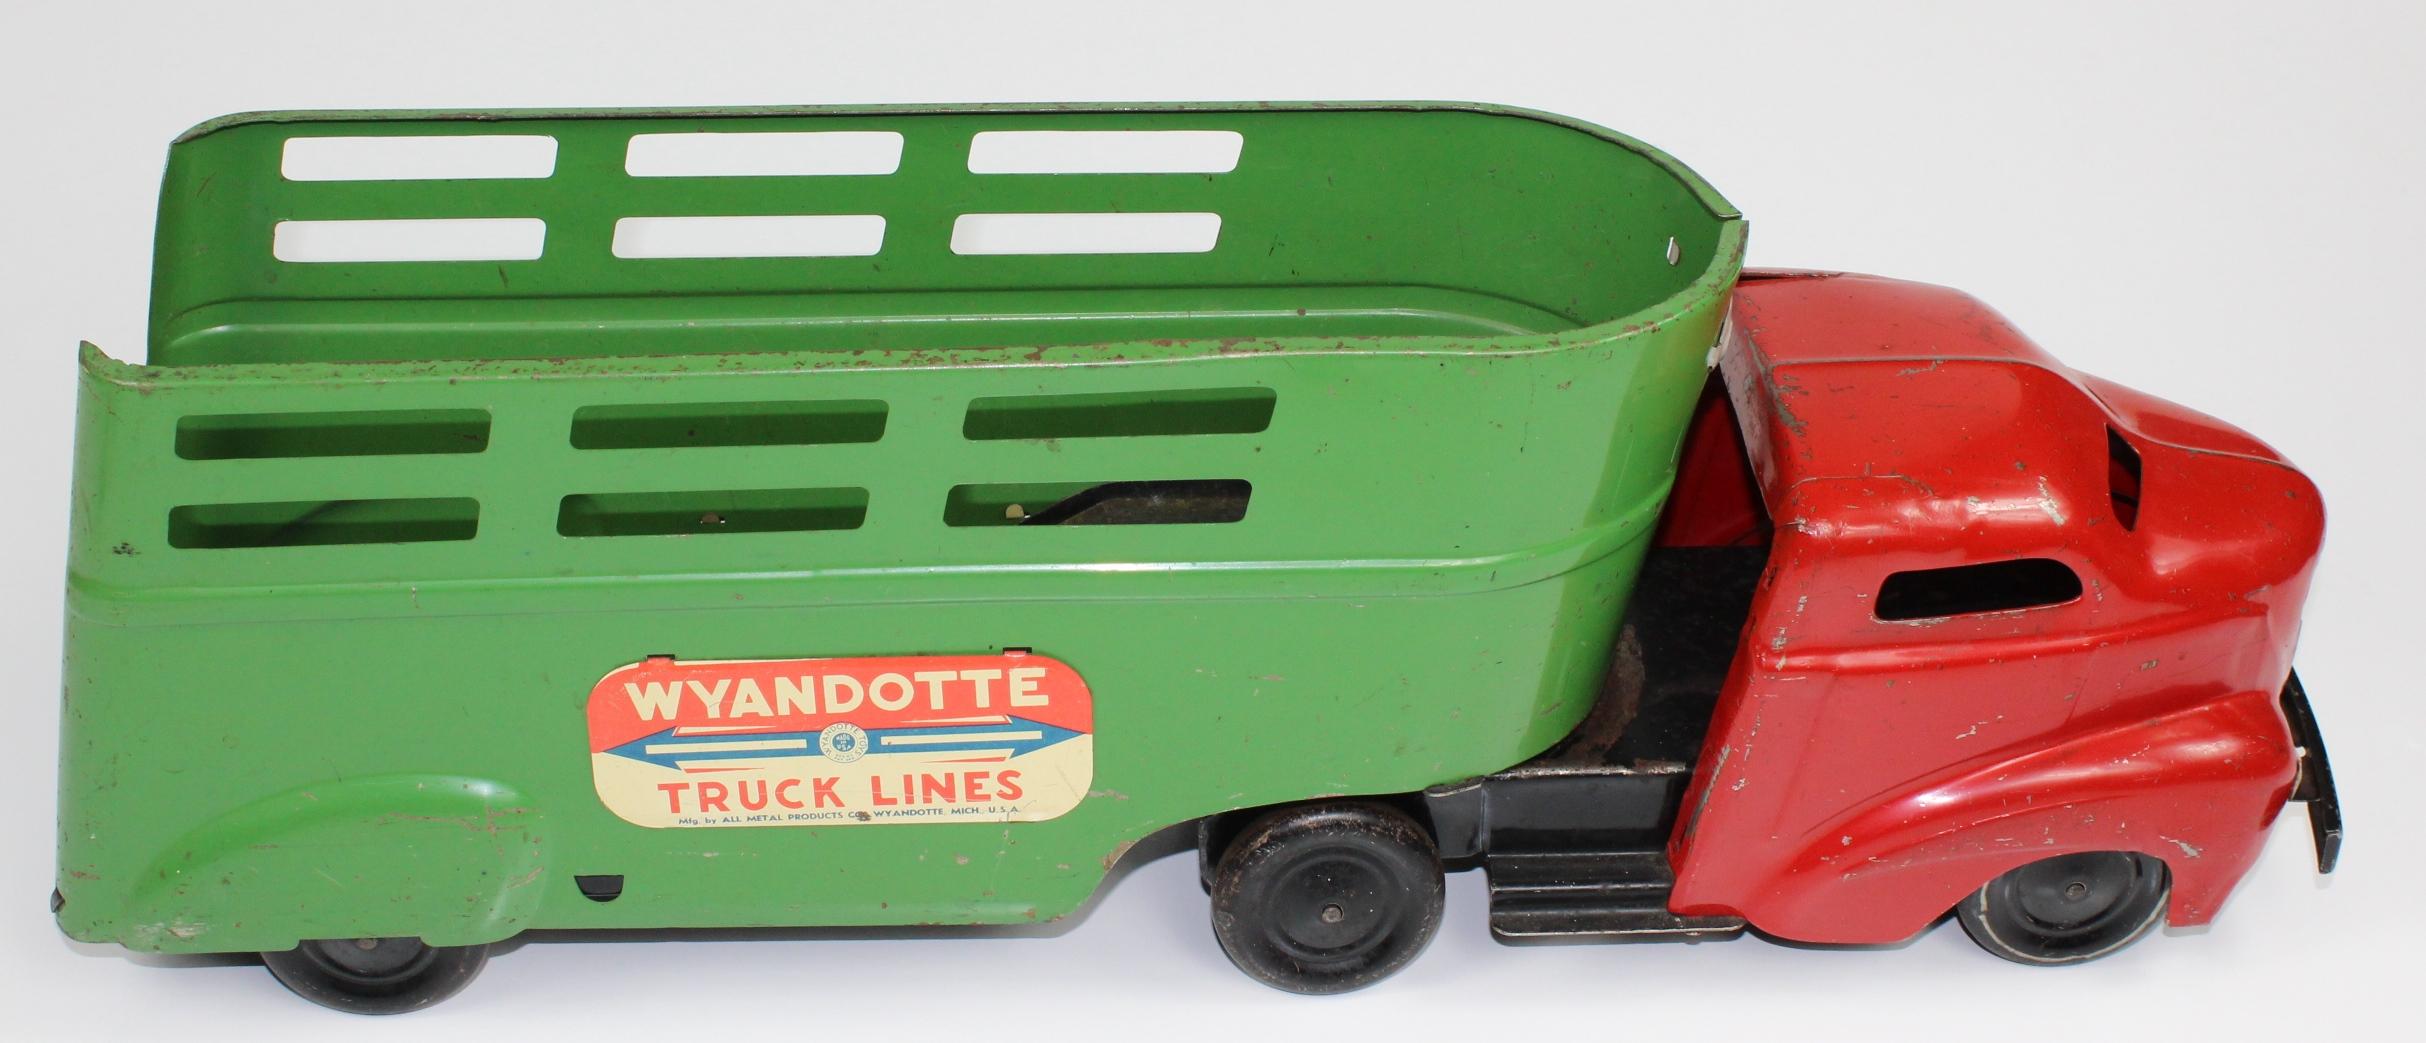 VINTAGE WYANDOTTE TRUCK LINES TRACTOR & TRAILER 1940s